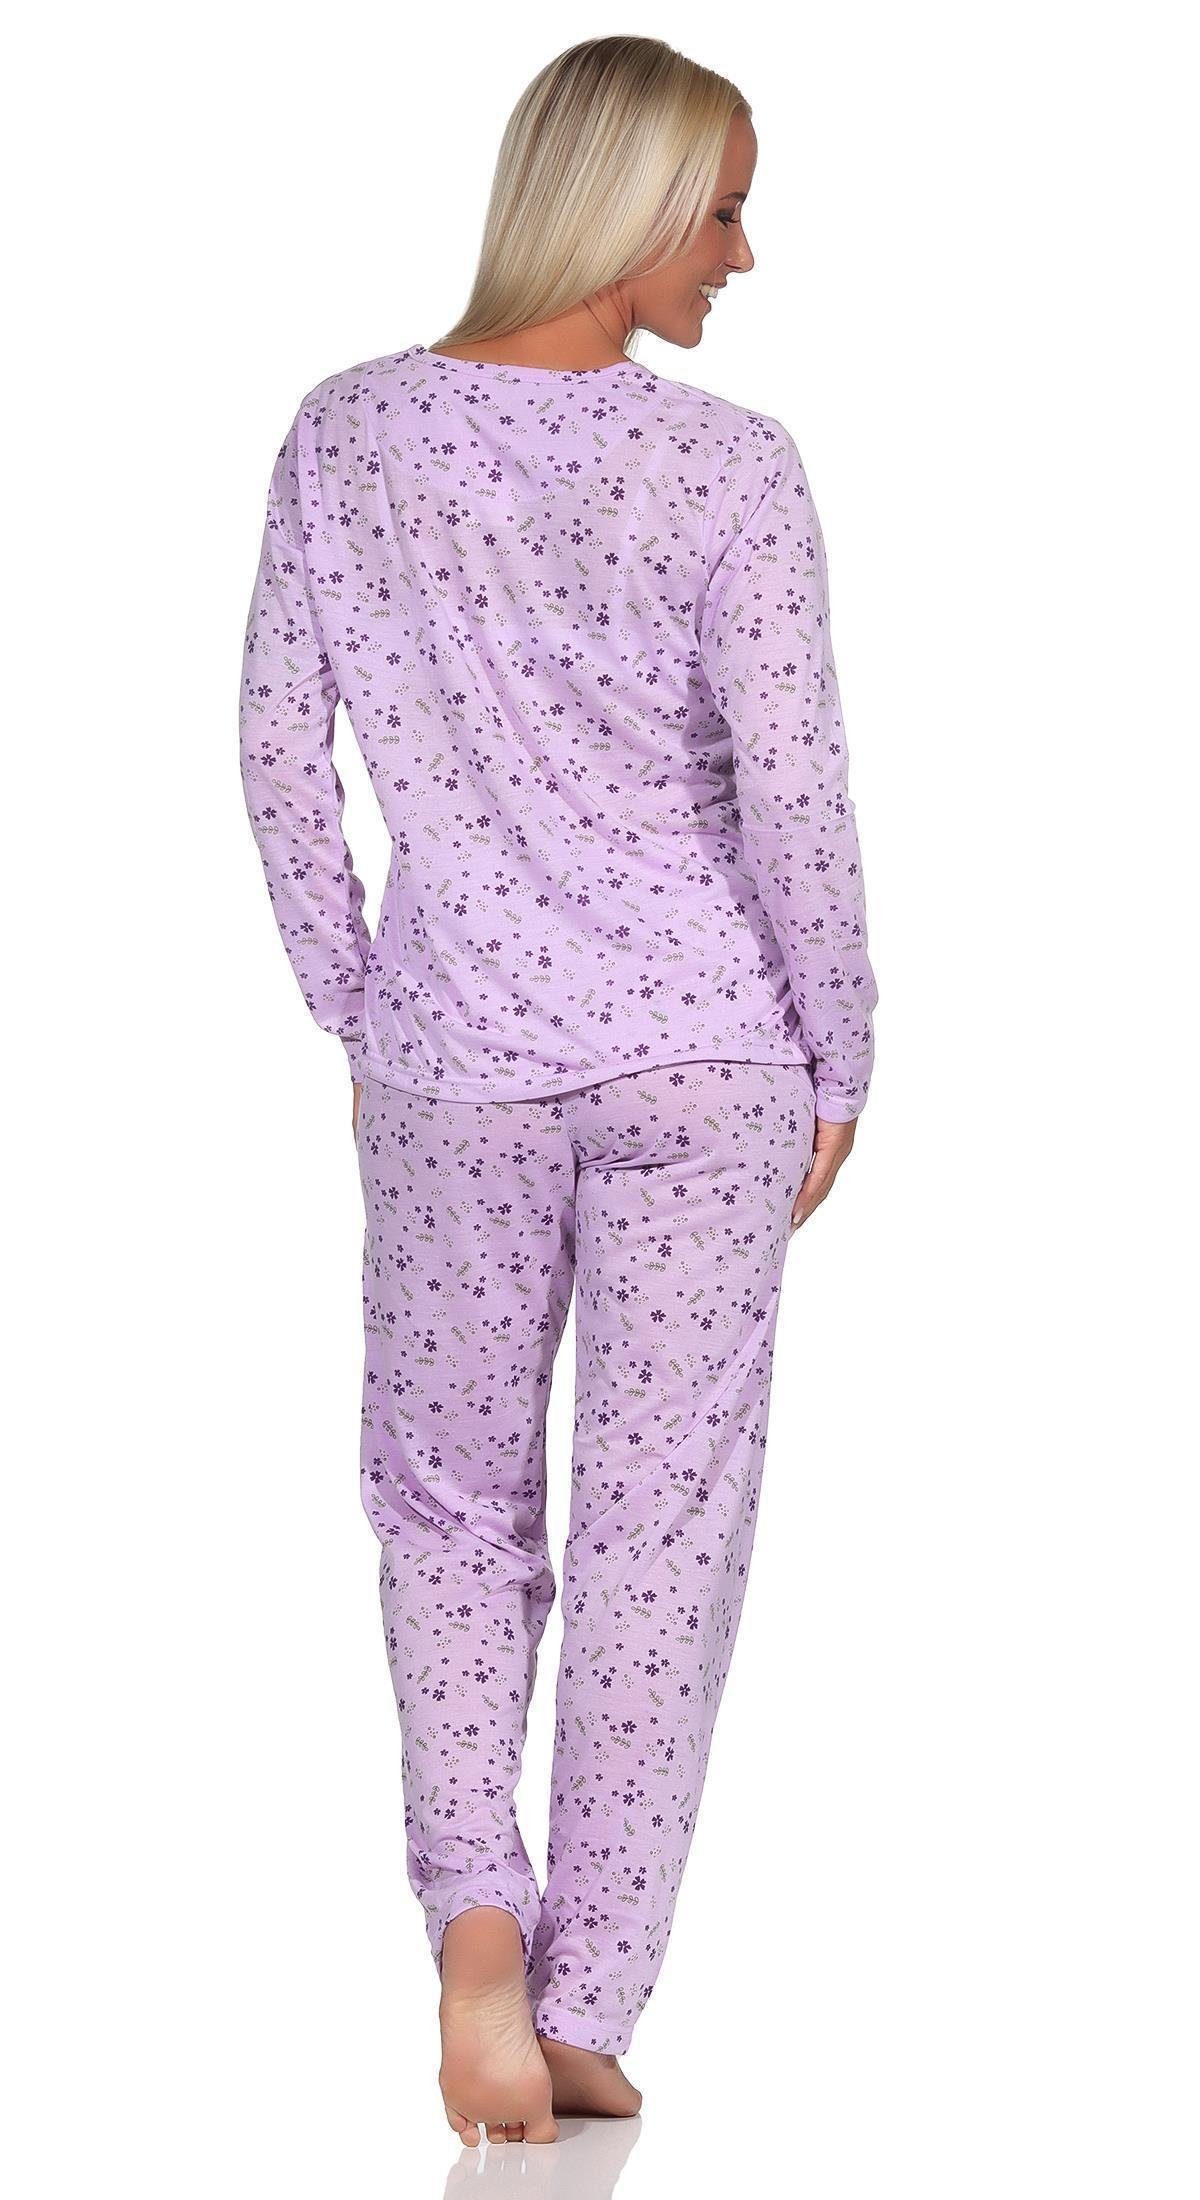 L EloModa 2XL XL Damen Pyjama Pyjama langarm (2 Flieder Schlafanzug; tlg) zweiteiliger M Gr.